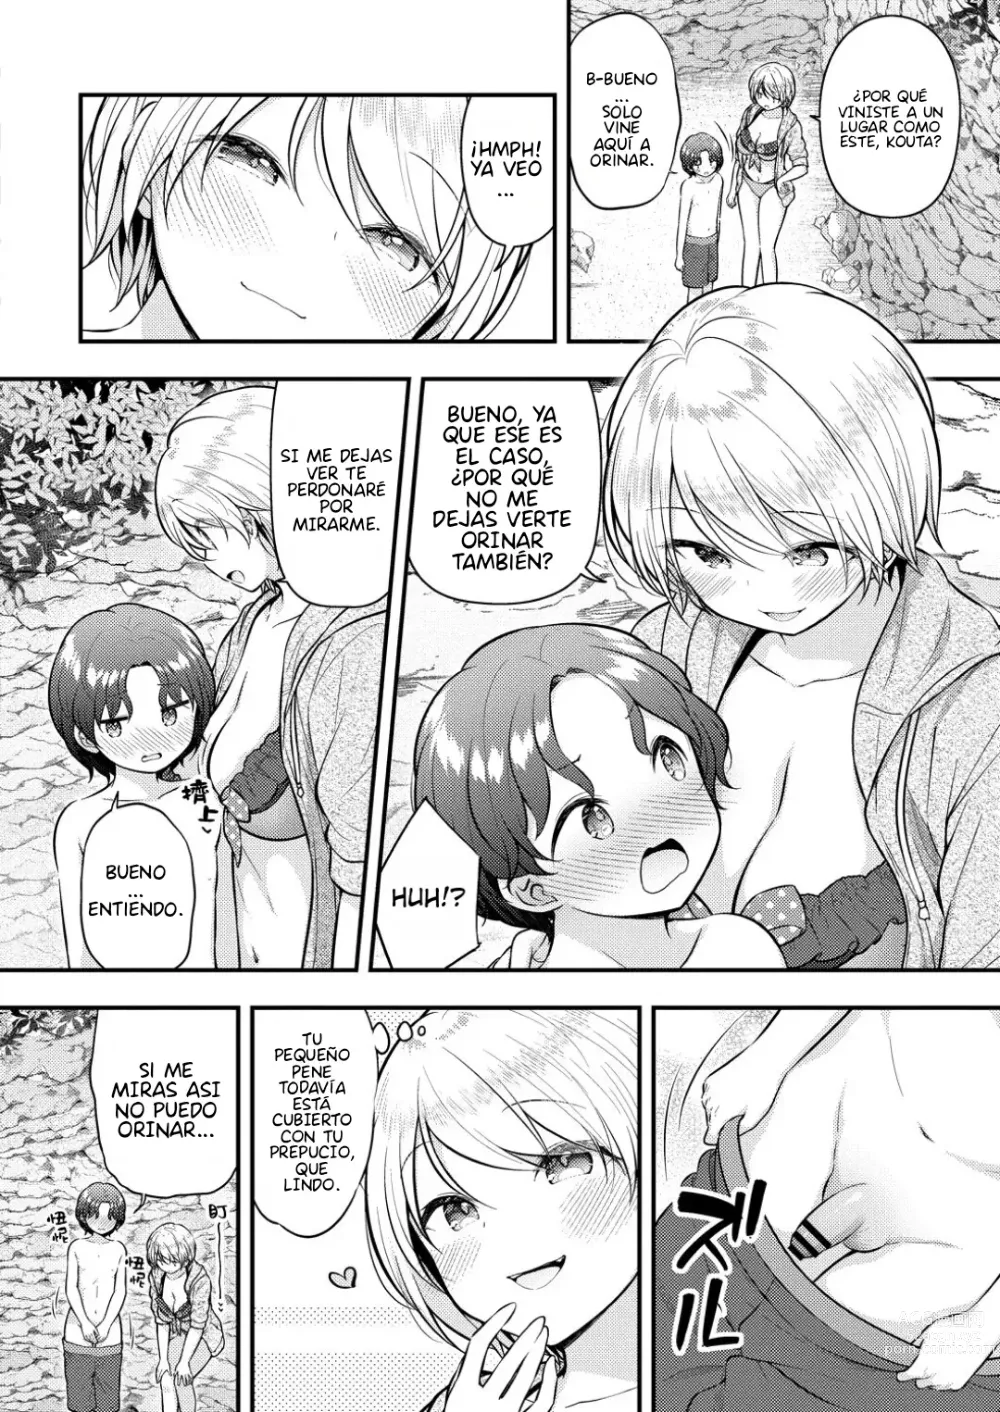 Page 4 of manga Una aventura de Verano.